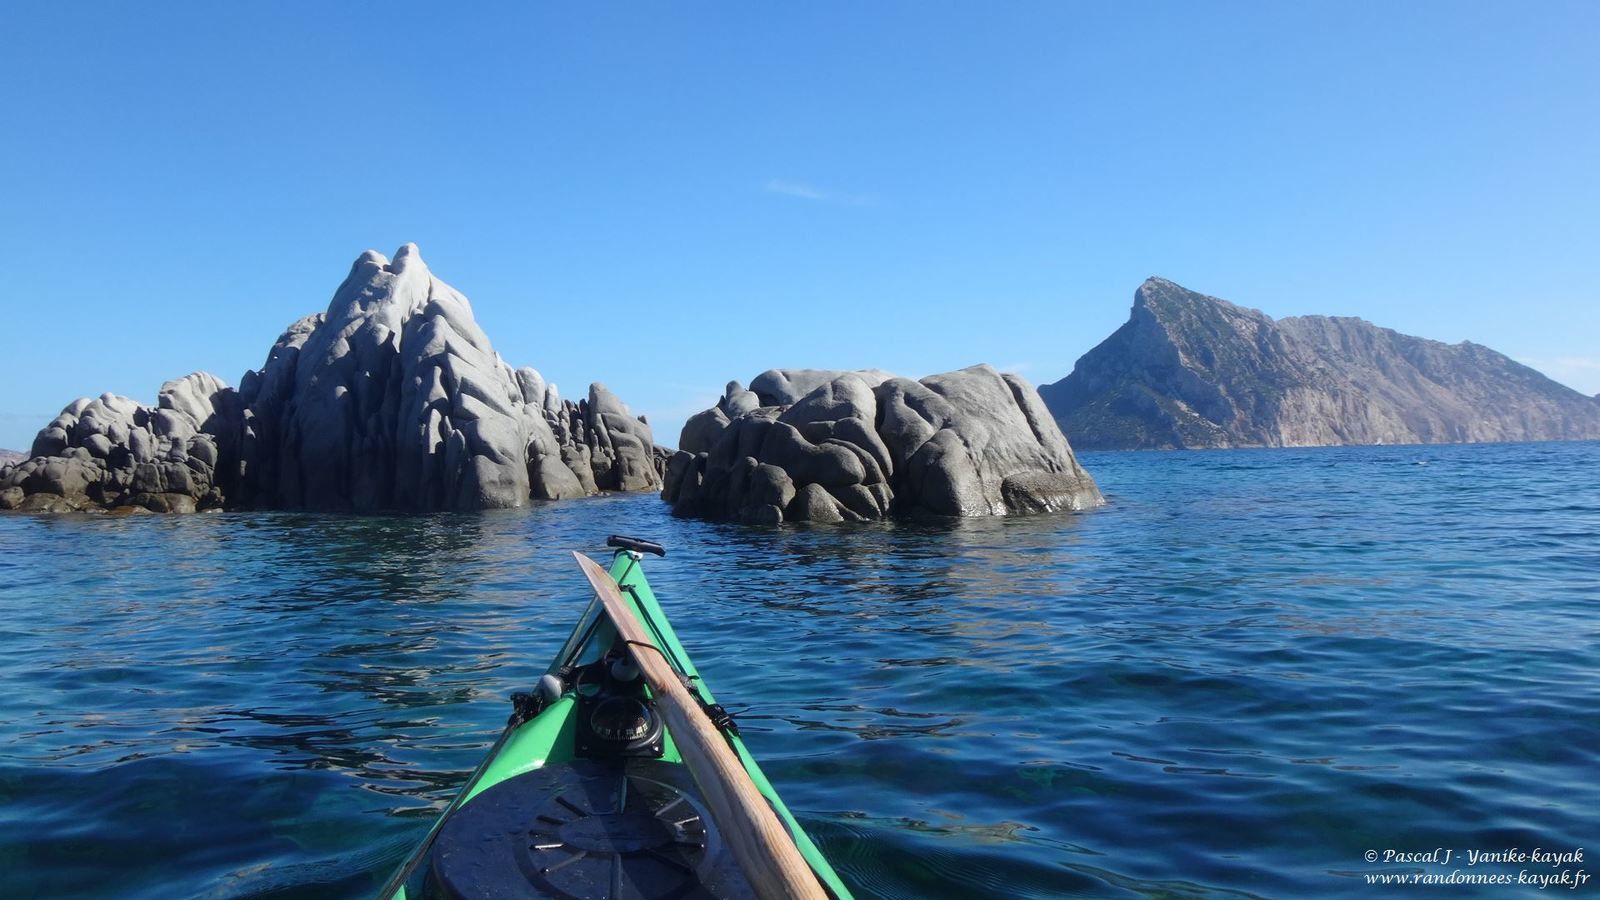 Sardegna 2019, una nuova avventura - Chapitre 9 - La beauté des îles, Piana et Tavolara